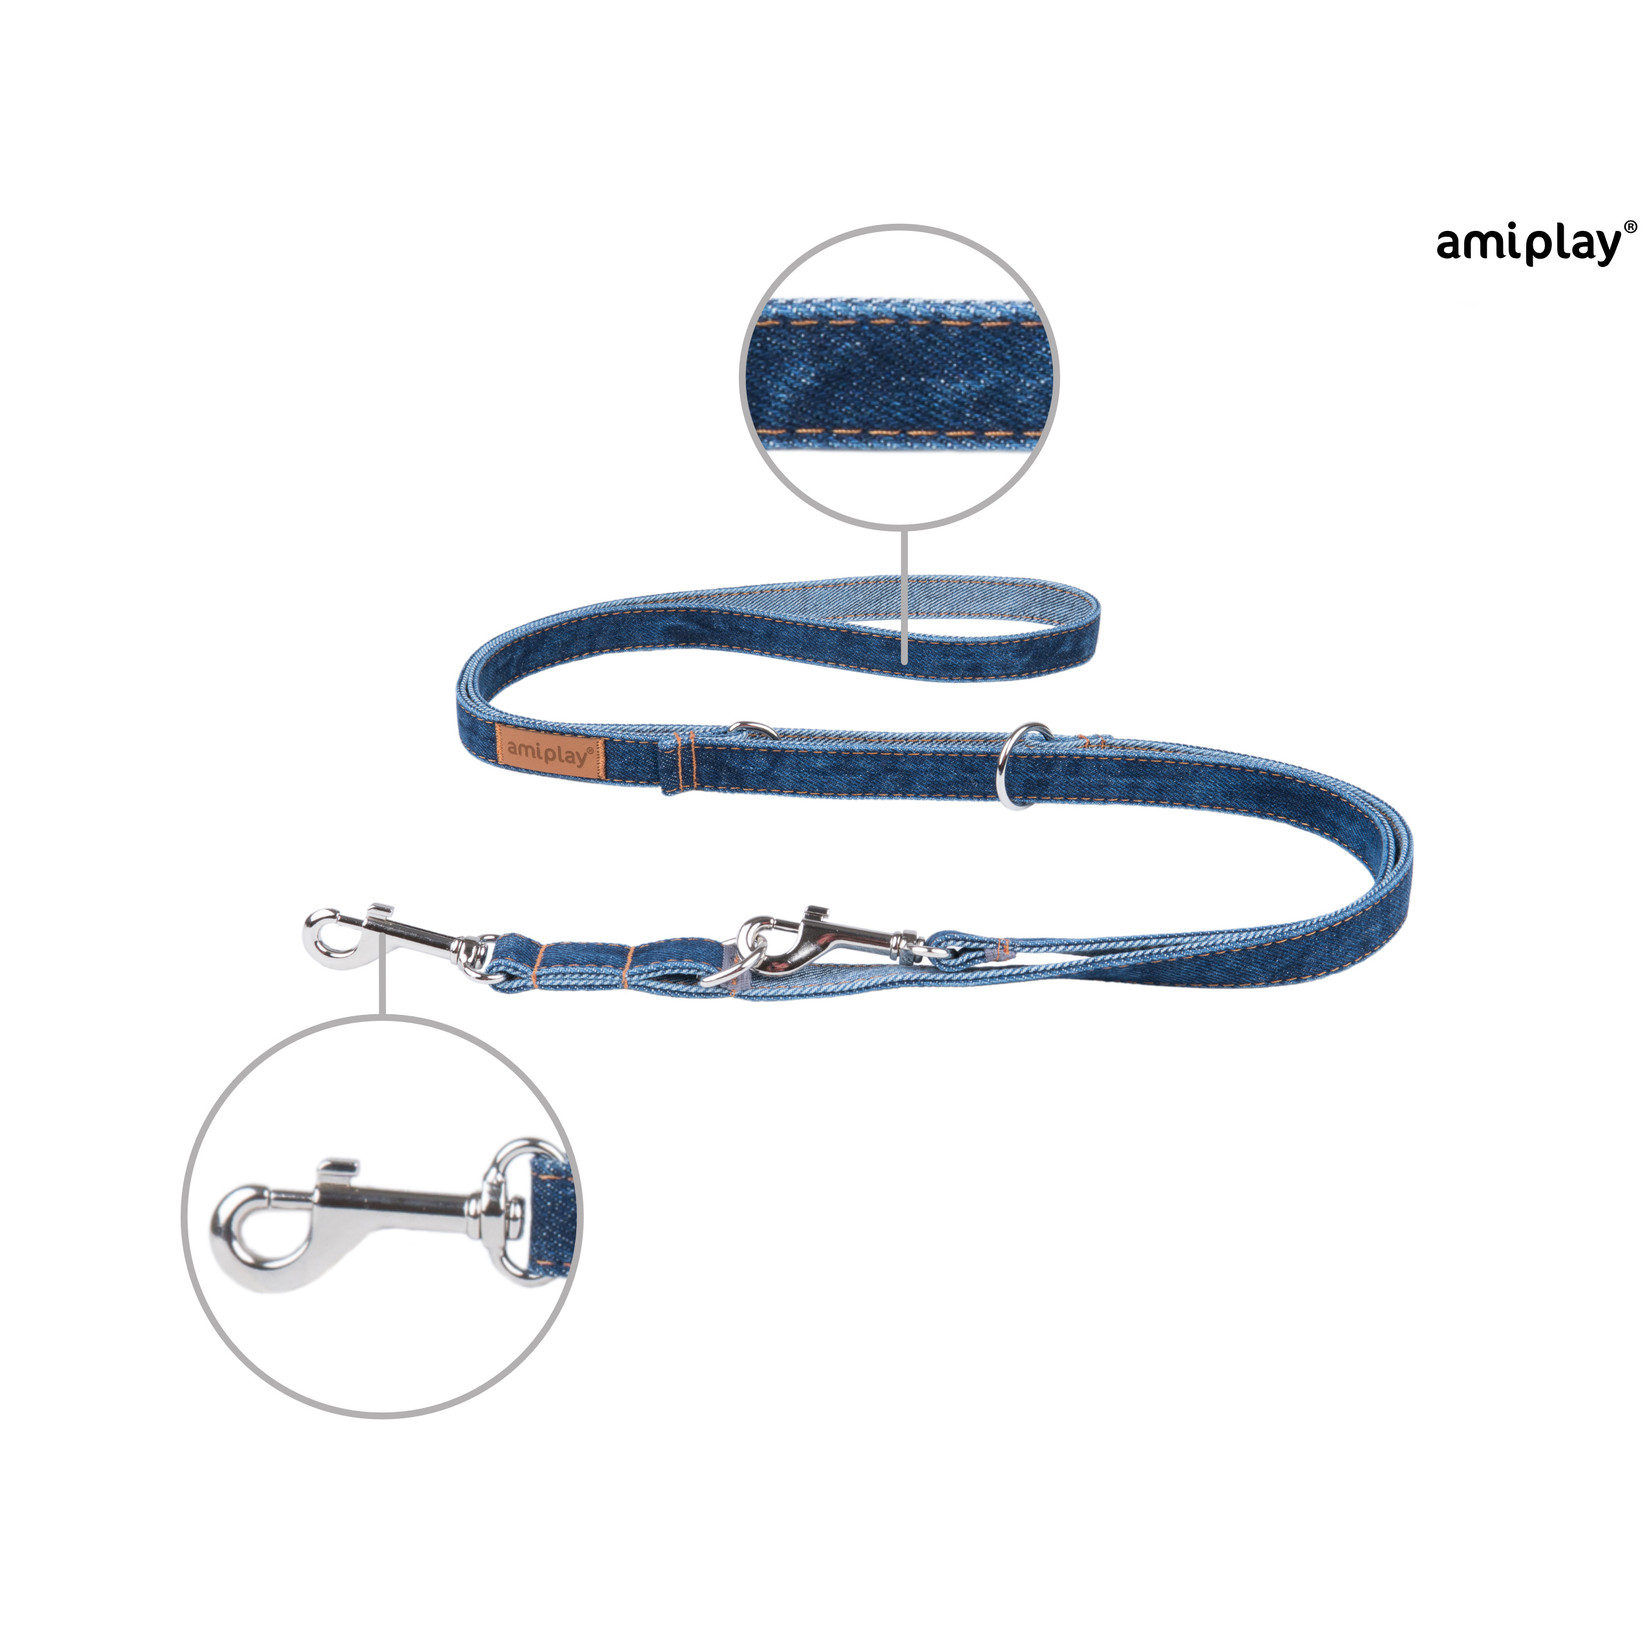 Amiplay Leiband verstelbaar 6in1 Denim donker blauw  maat-S / 100-200x1cm